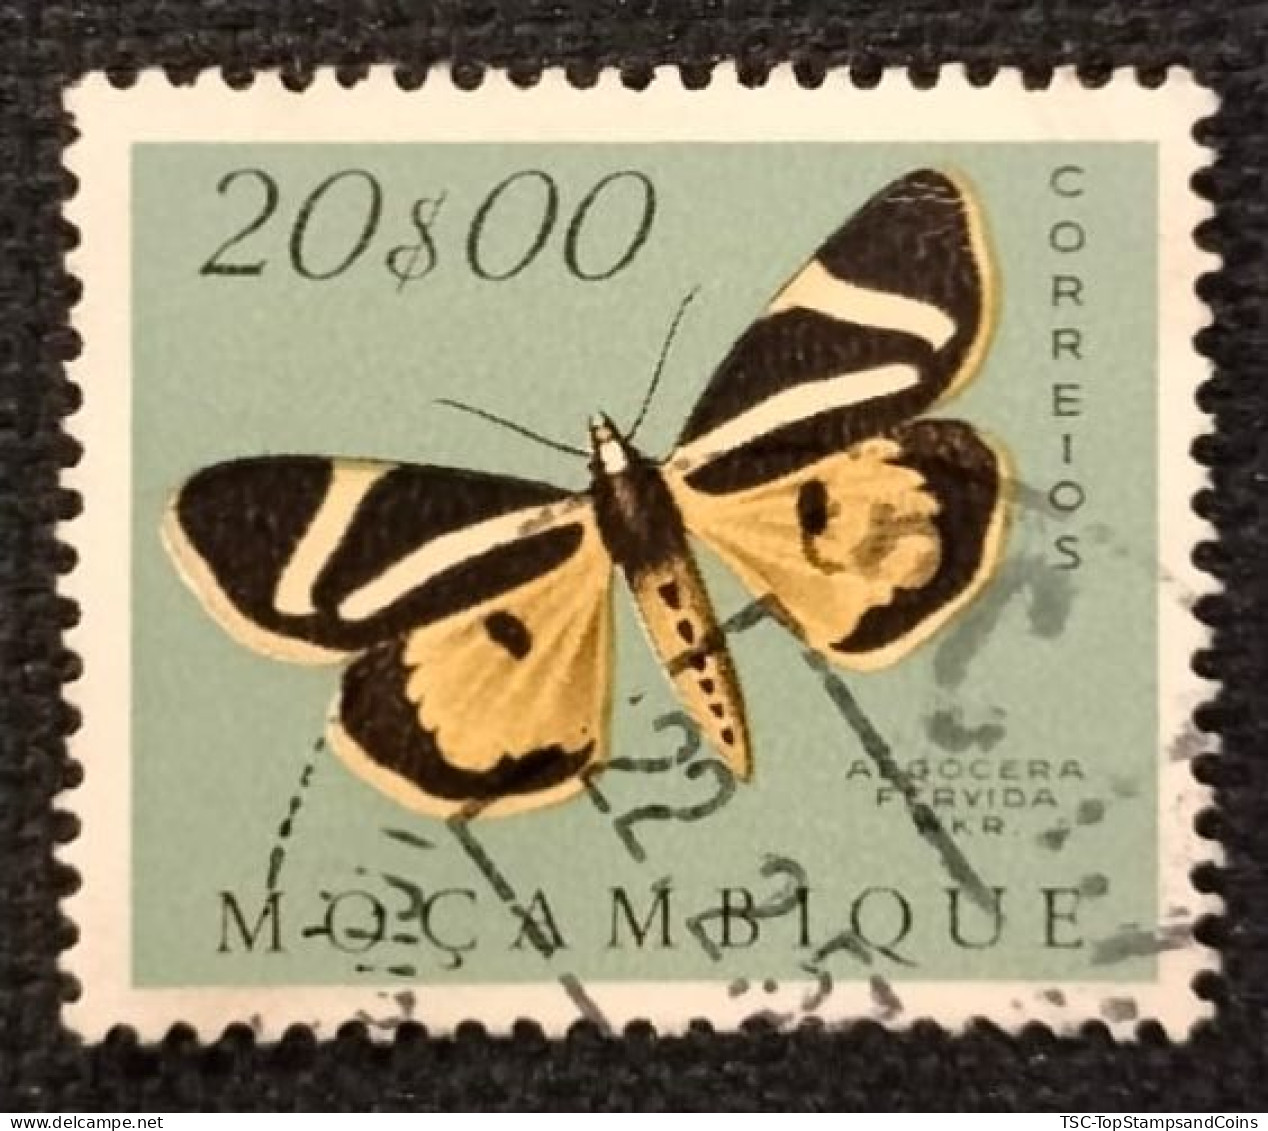 MOZPO0407U7 - Mozambique Butterflies - 20$00 Used Stamp - Mozambique - 1953 - Mosambik